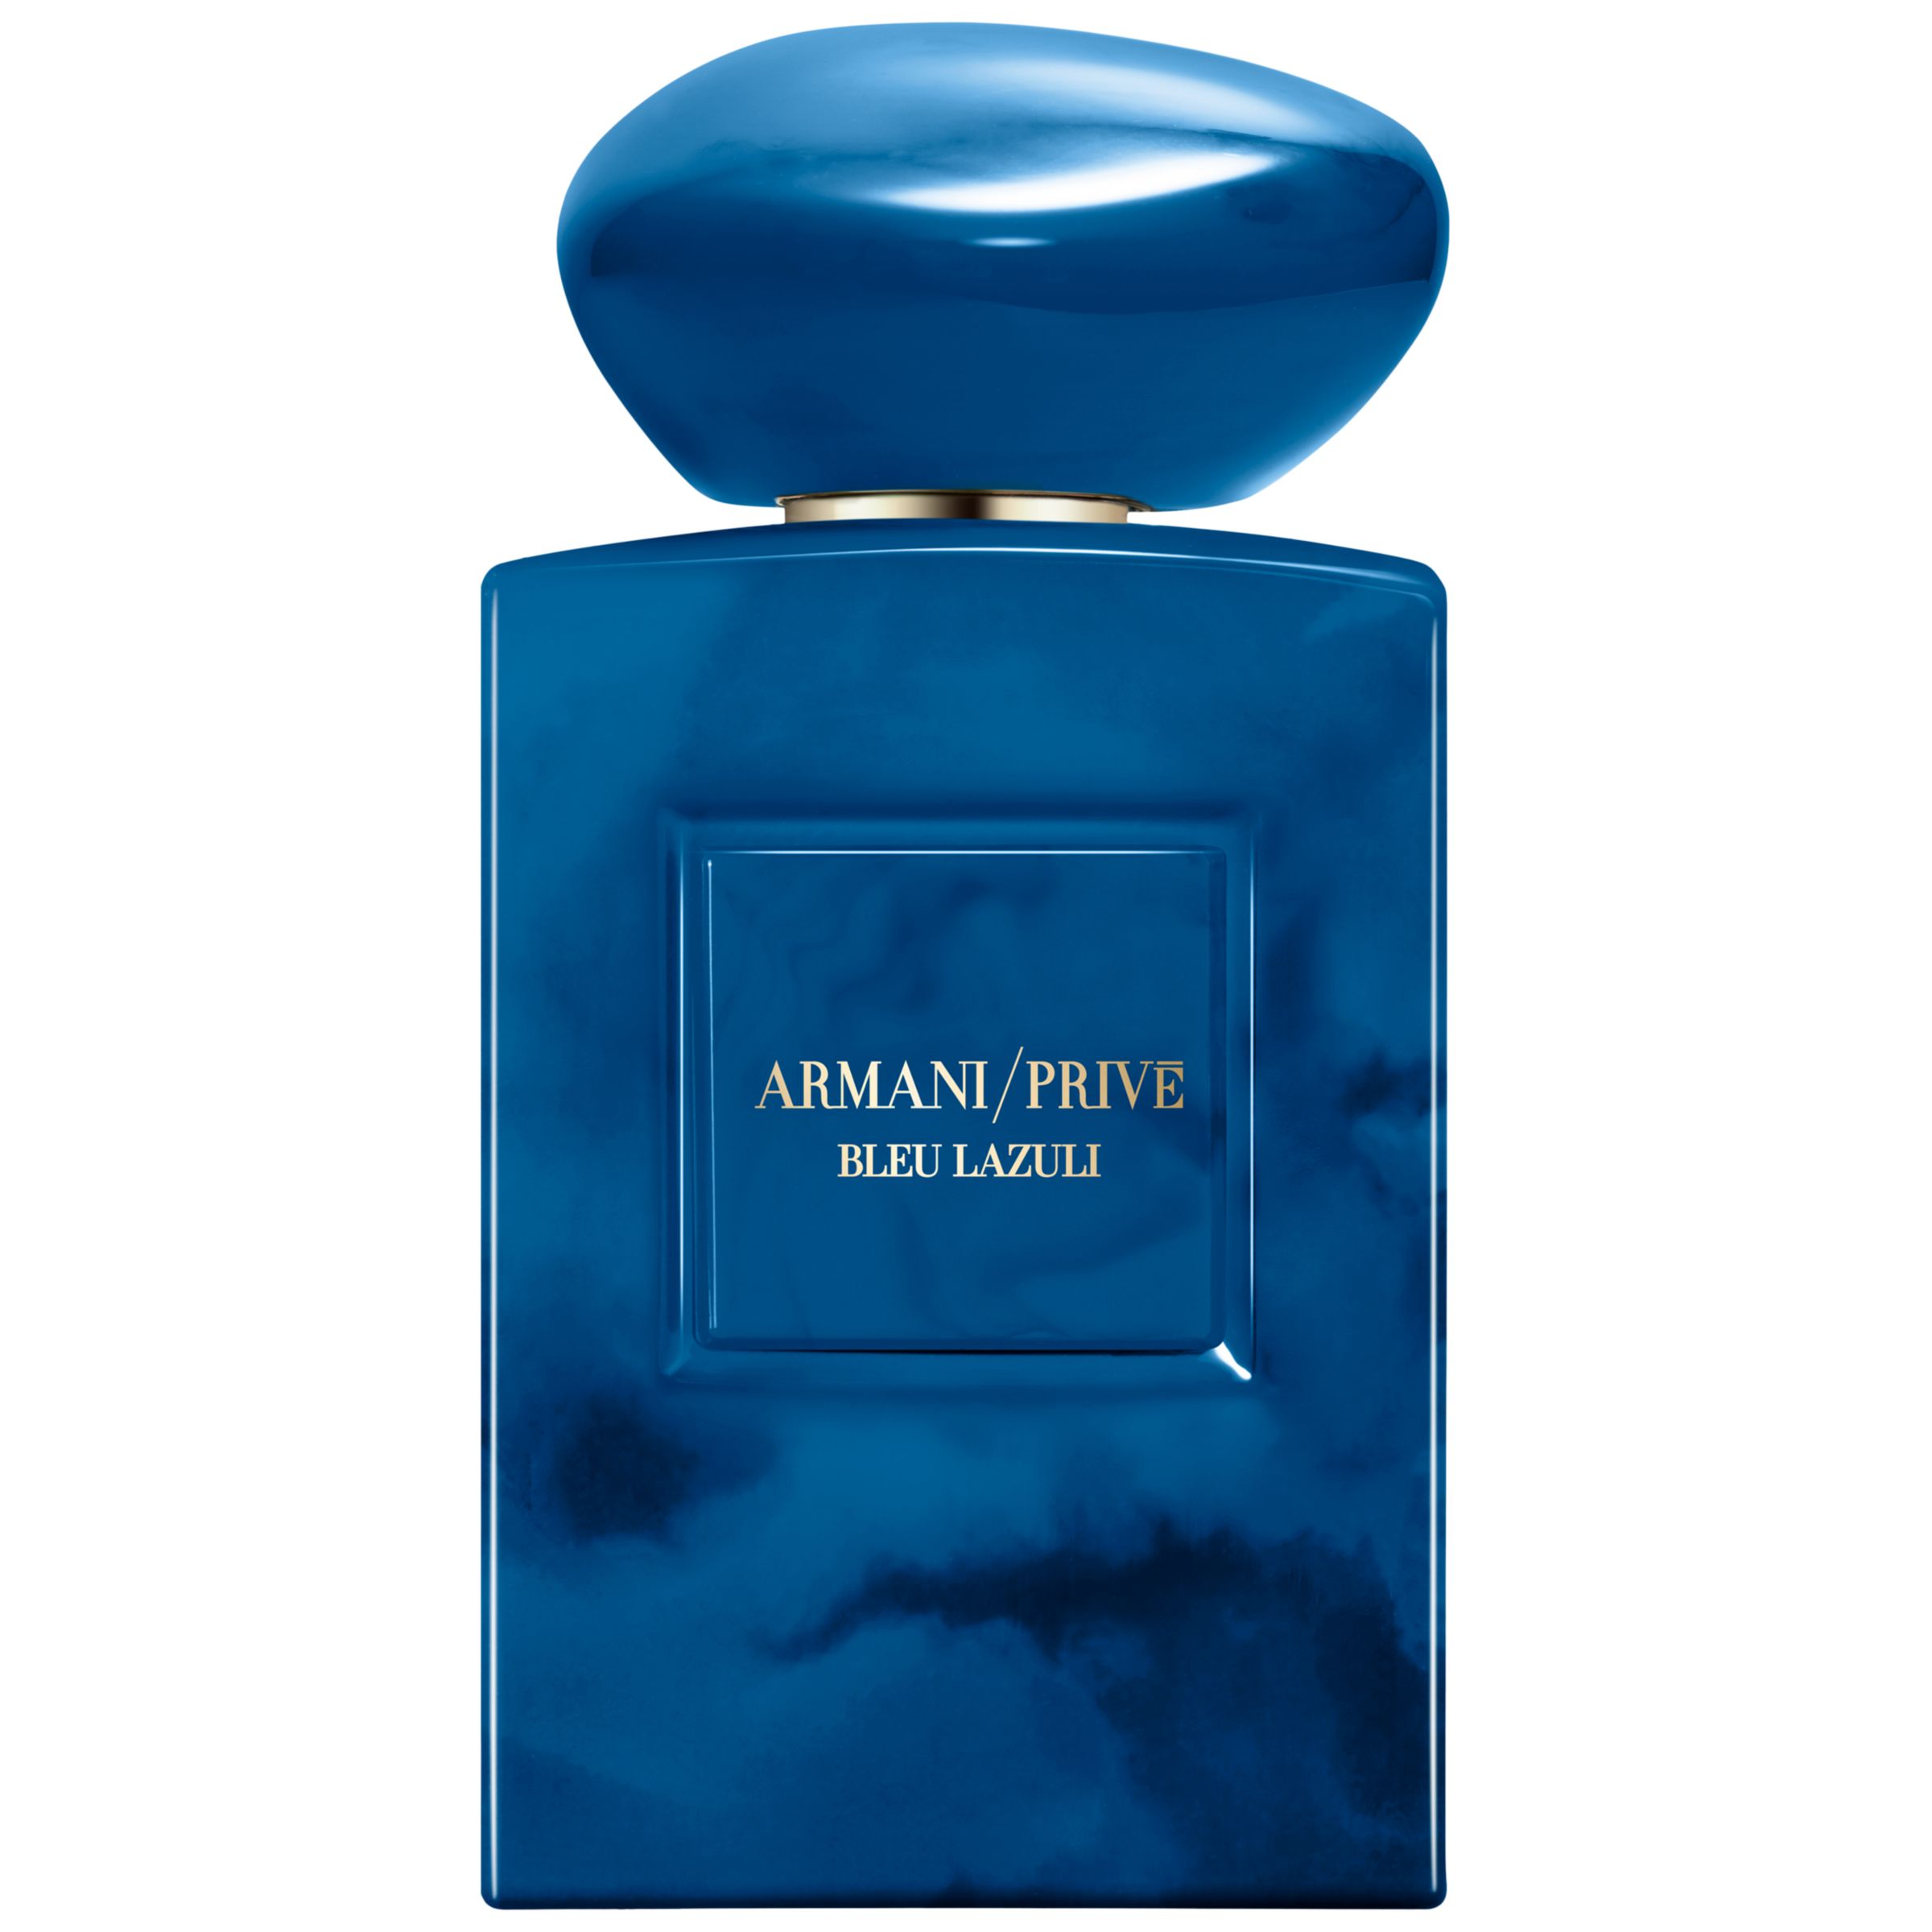 Giorgio Armani / Privé Bleu Lazuli Eau de Parfum, 100ml at John Lewis ...